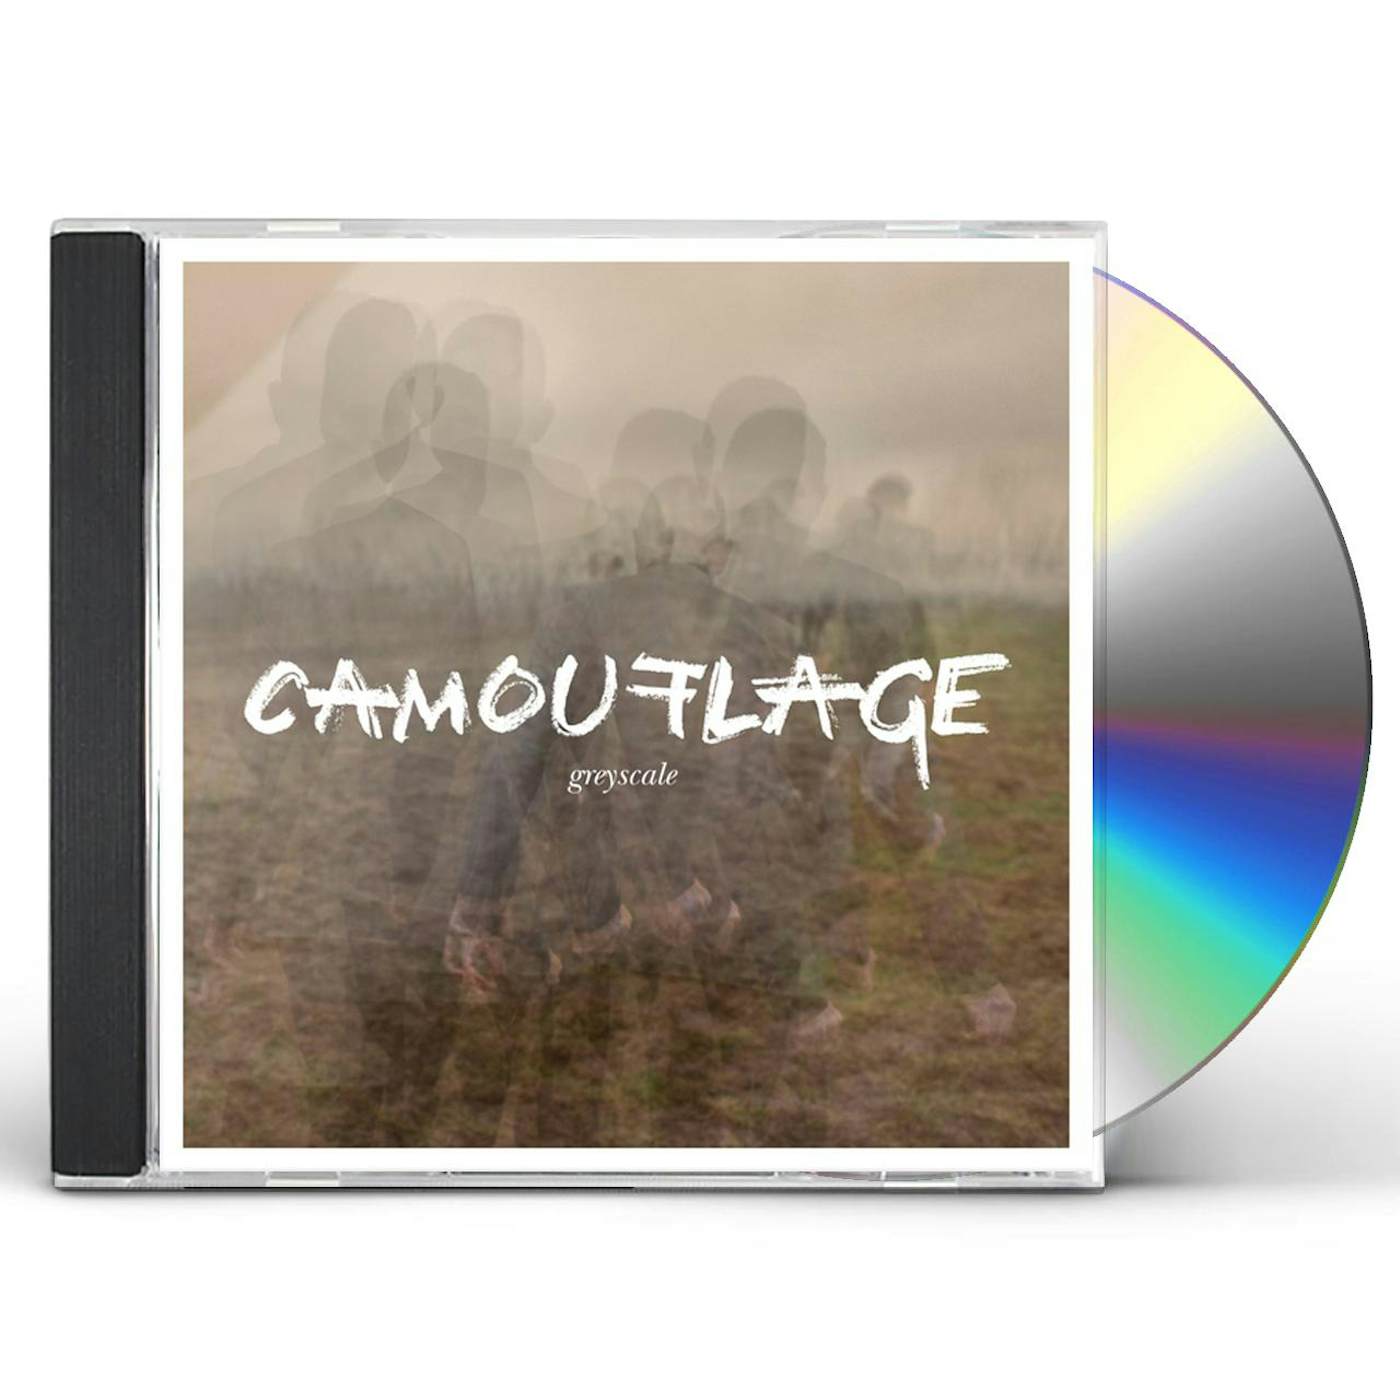 Camouflage GREYSCALE CD